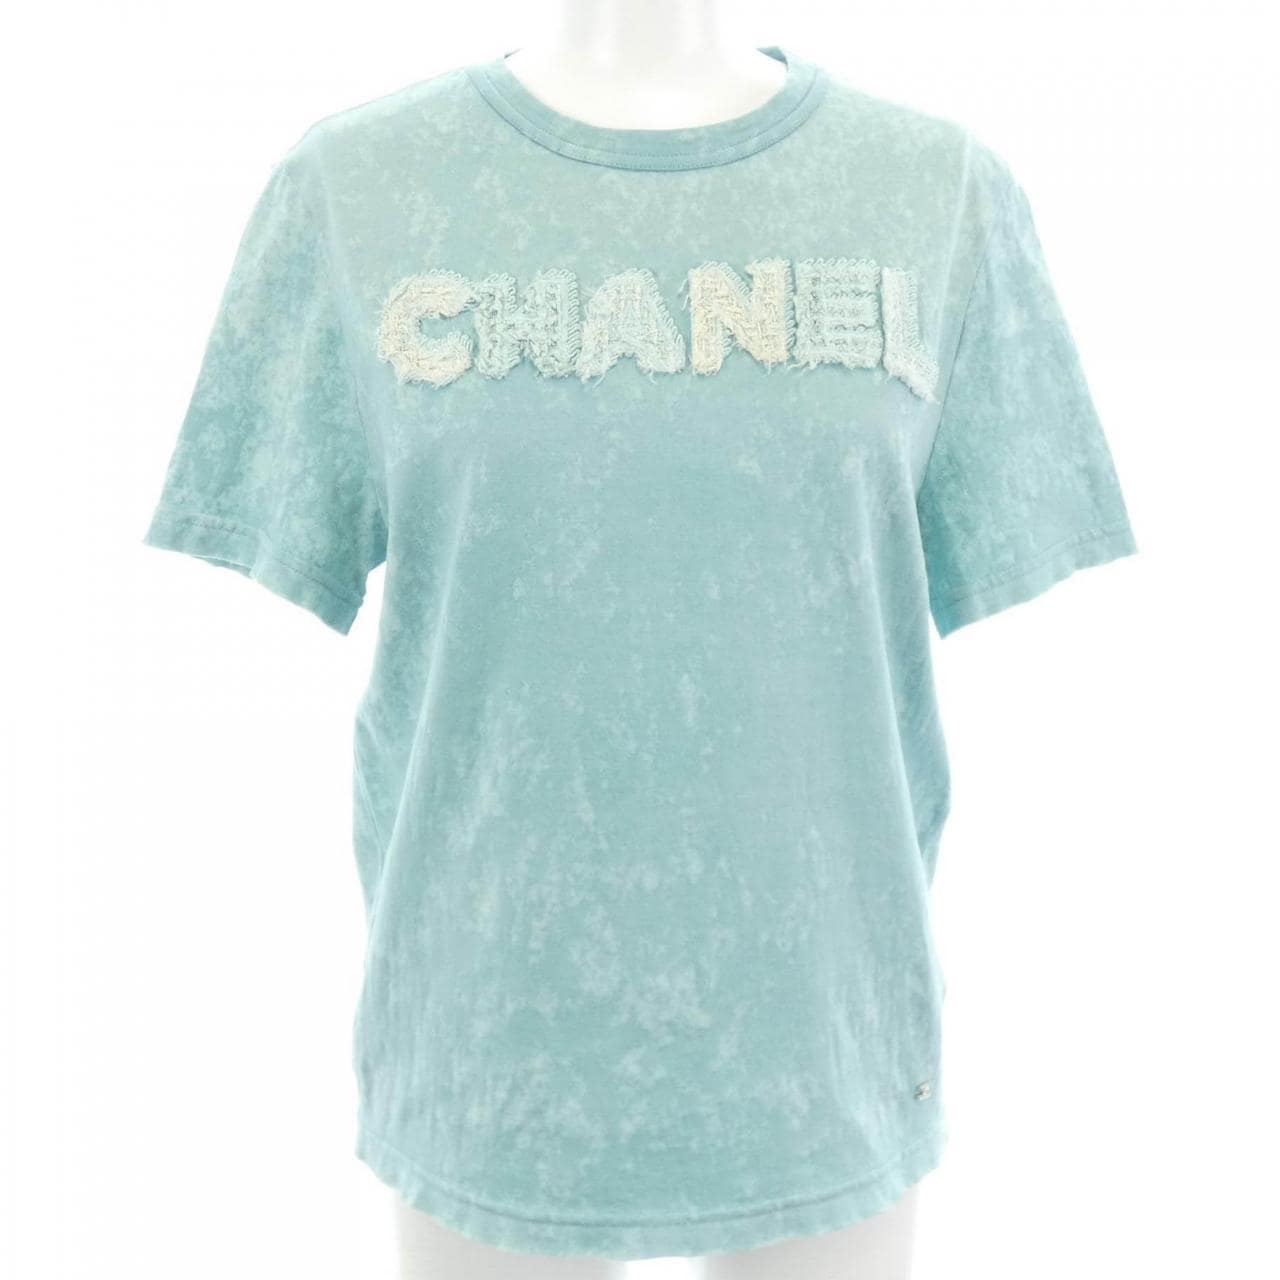 CHANEL CHANEL T-shirt